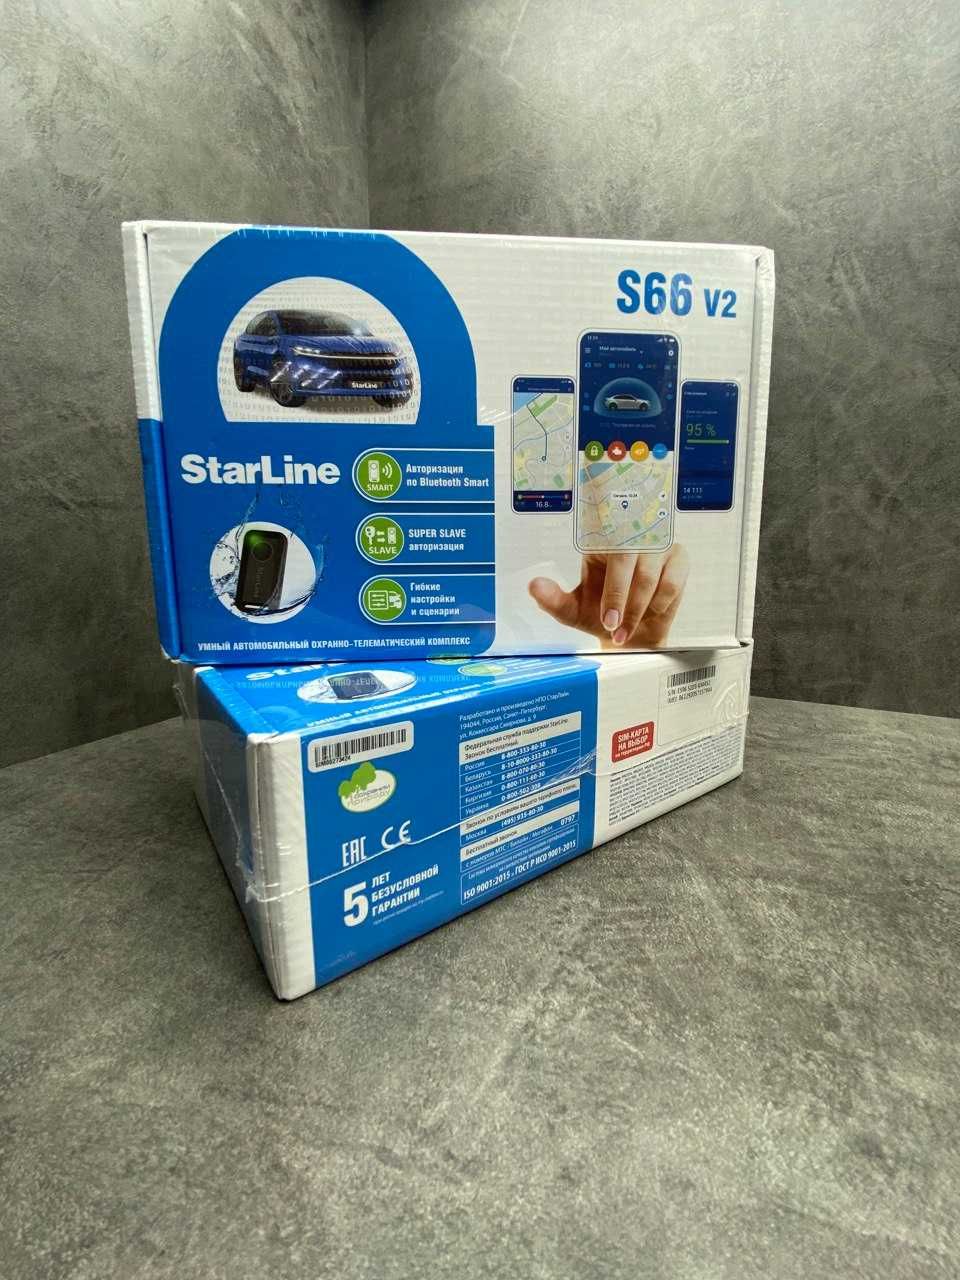 StarLine S66 v2 ECO GSM, автозапуск. Продажа и установка сигнализации!